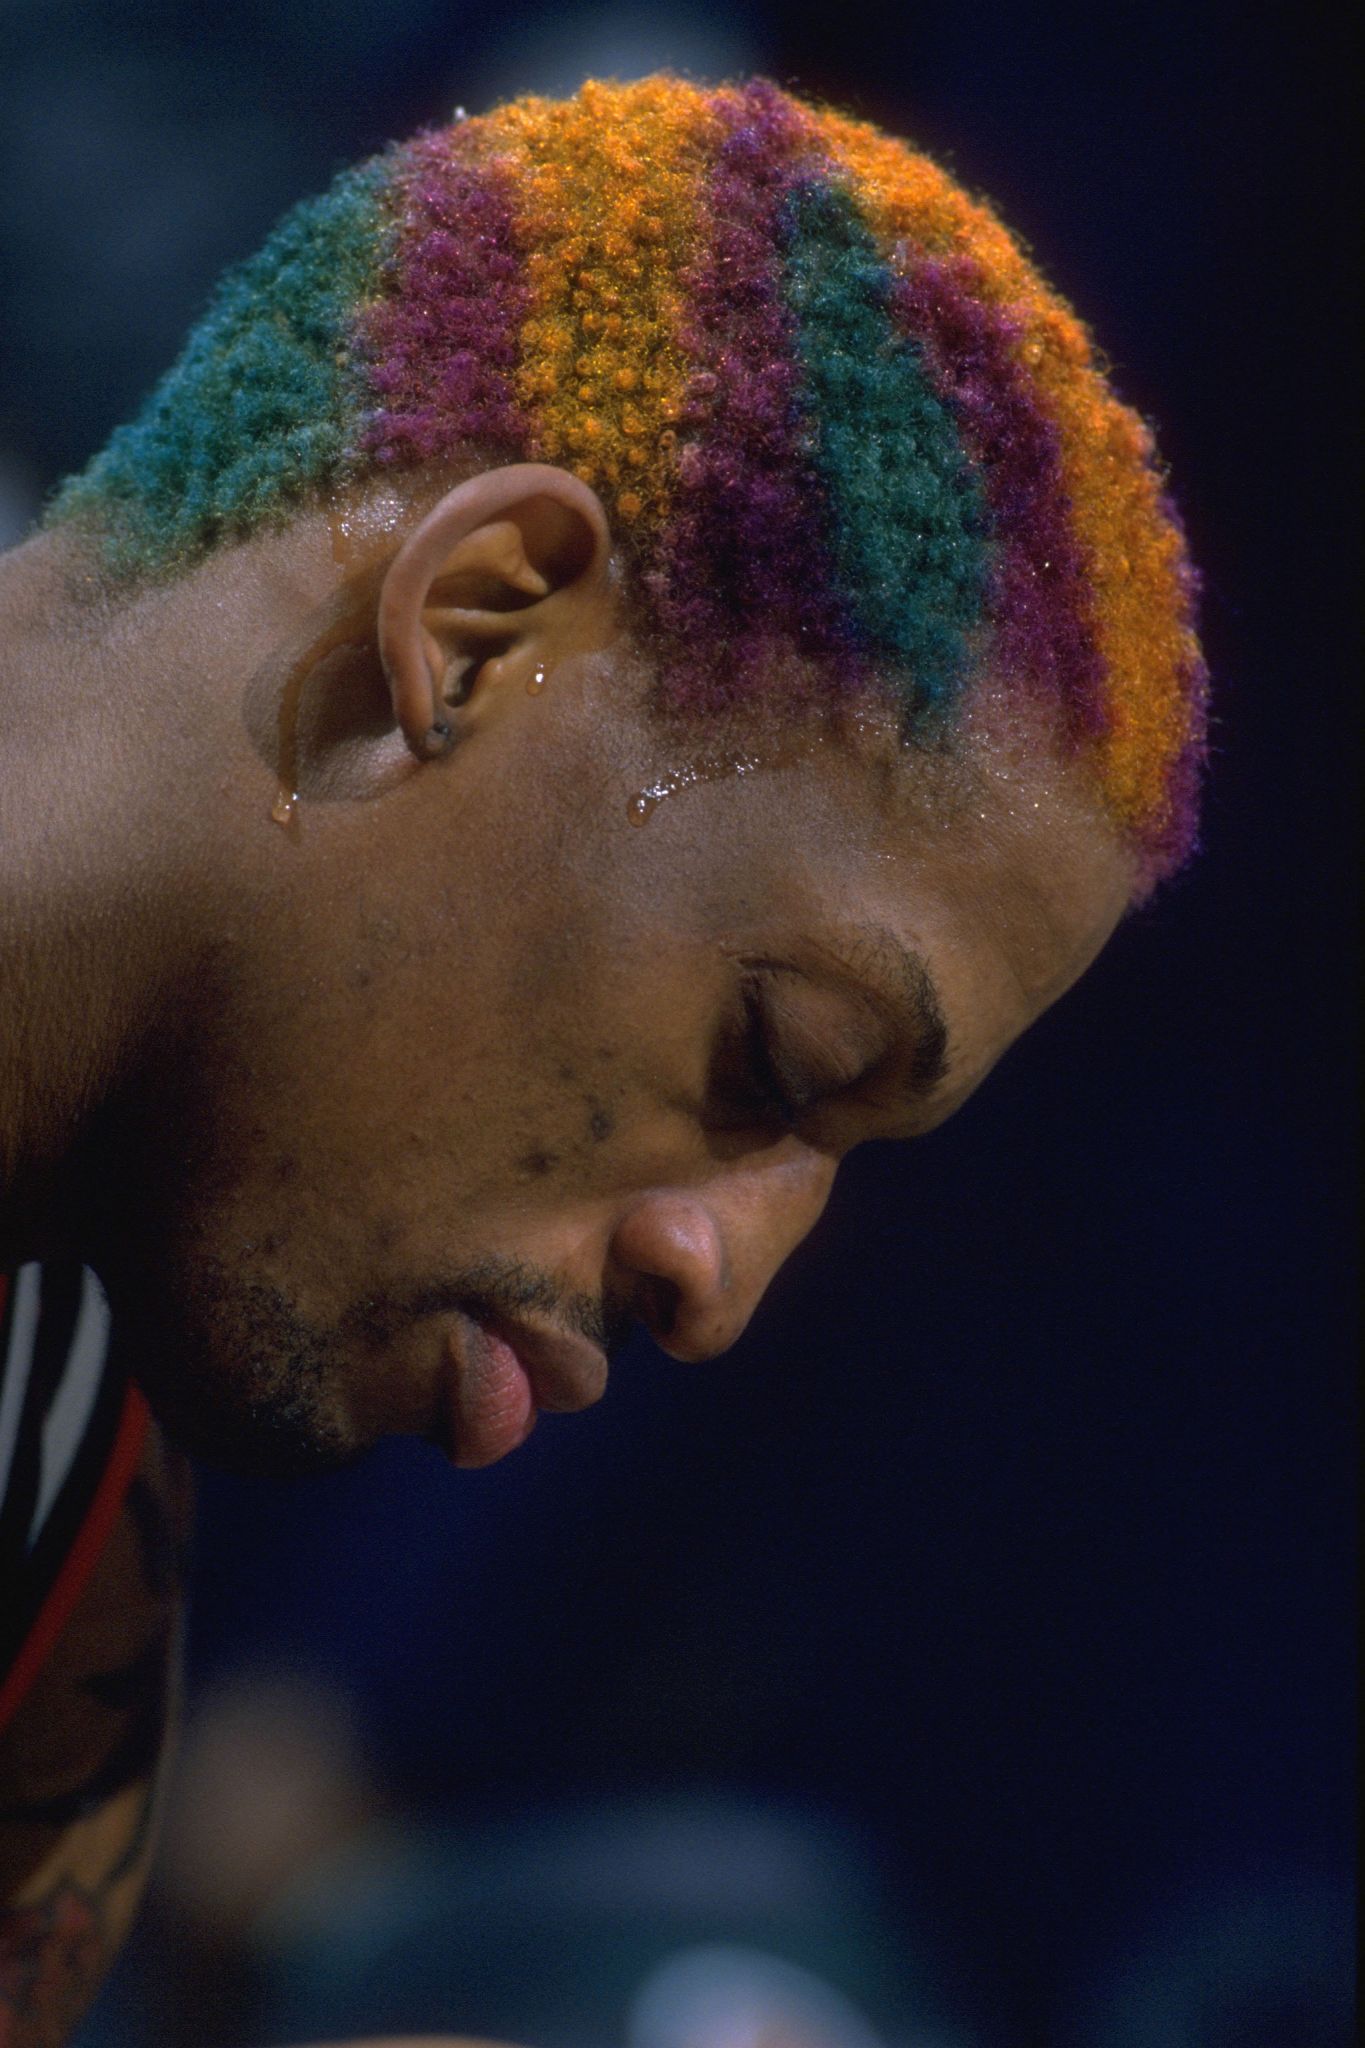 The Pantone colors of Dennis Rodman hair